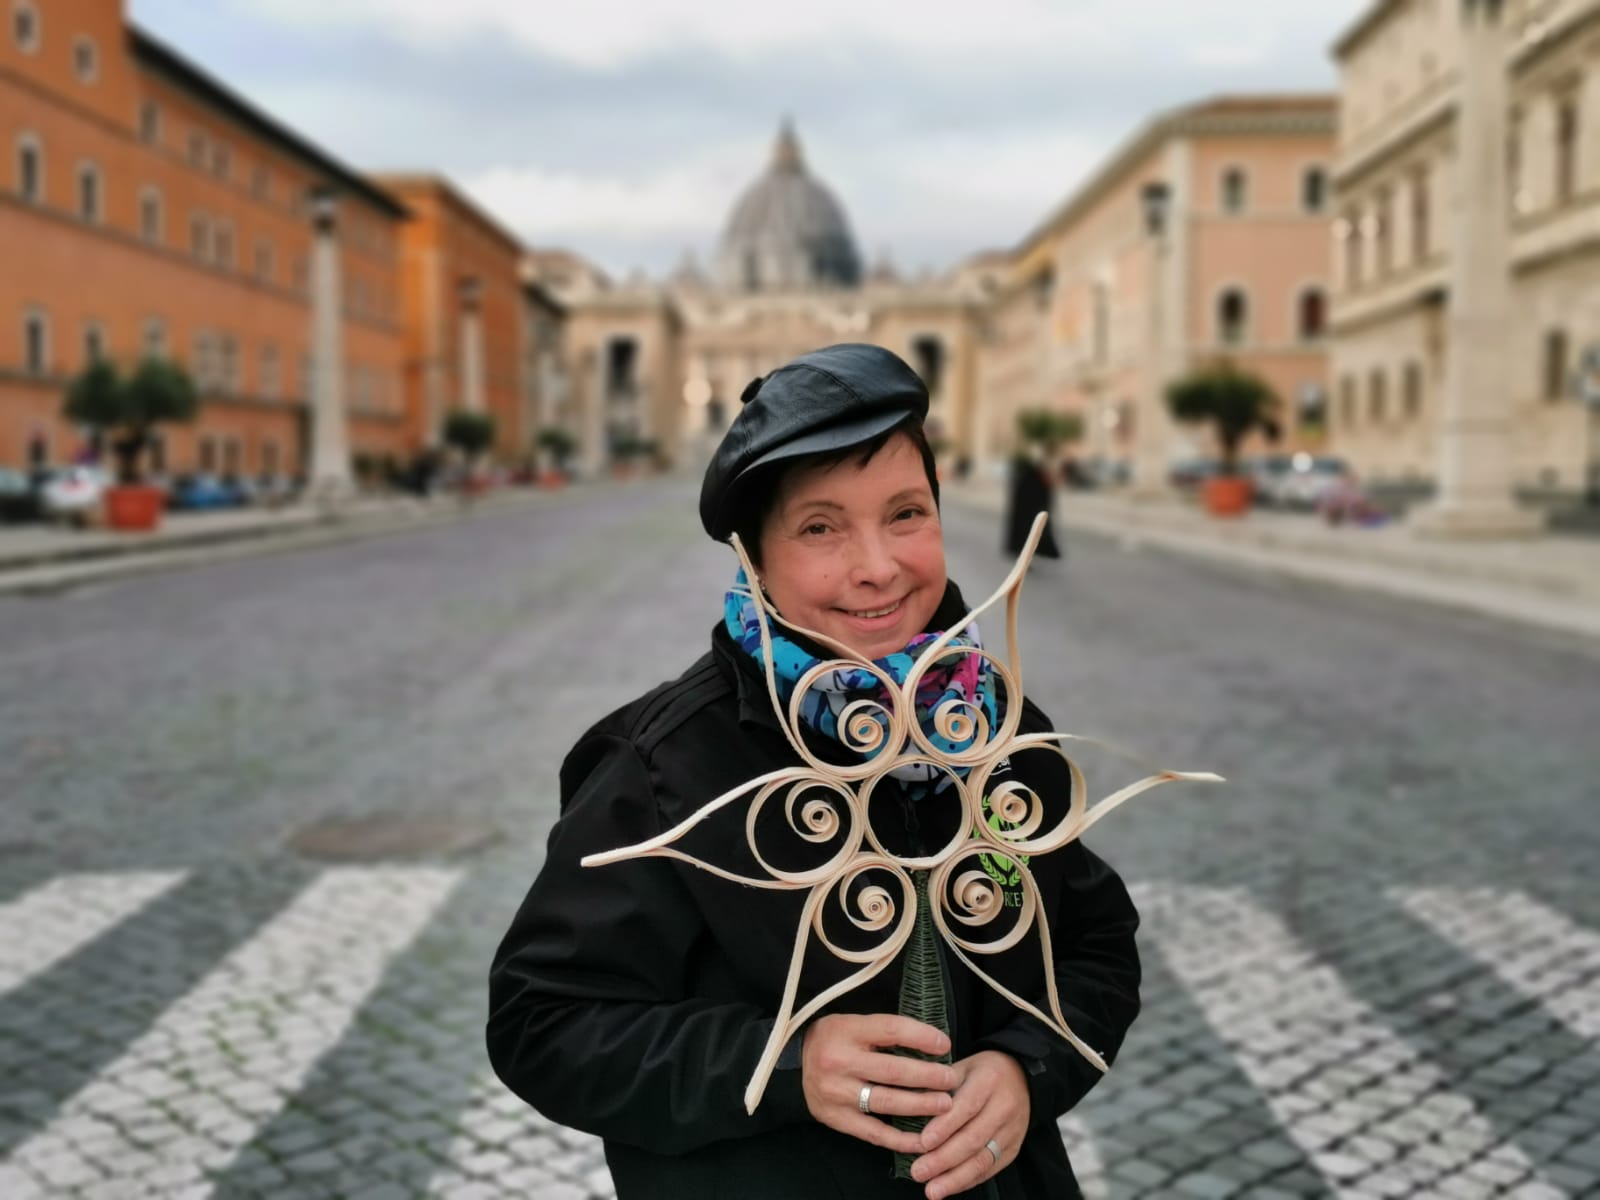 Décorations de Noël 2020 du Vatican offertes par la Slovénie © Sabina Segula